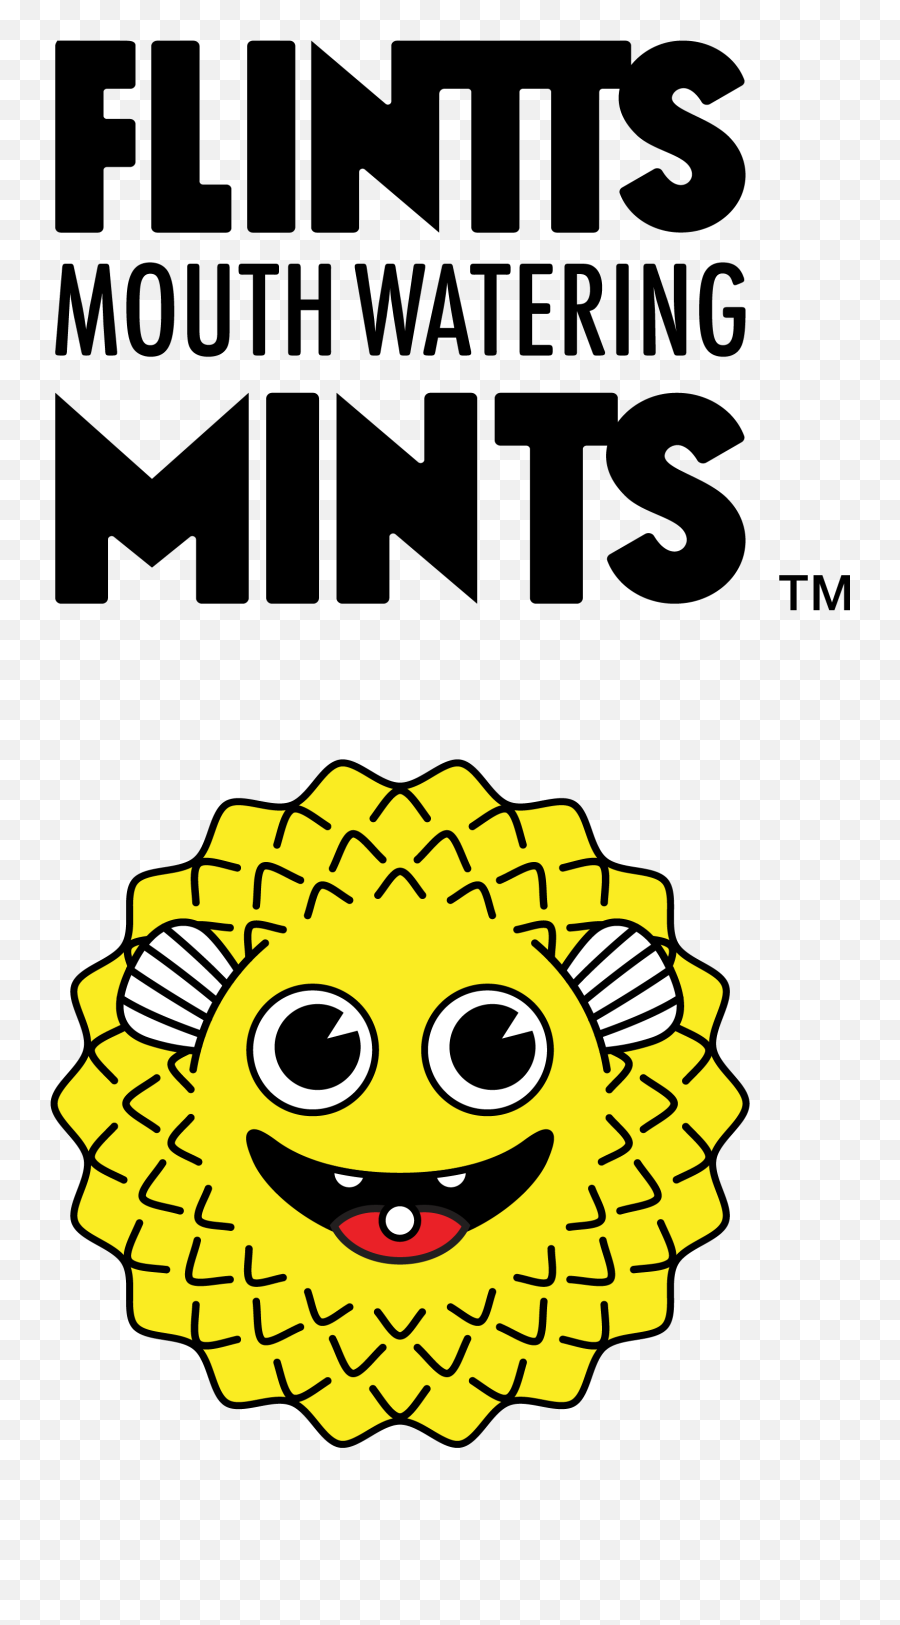 Vendors 2019 The Harvest Cup - Flints Mouth Watering Mints Emoji,Heavy Metal Emoticon